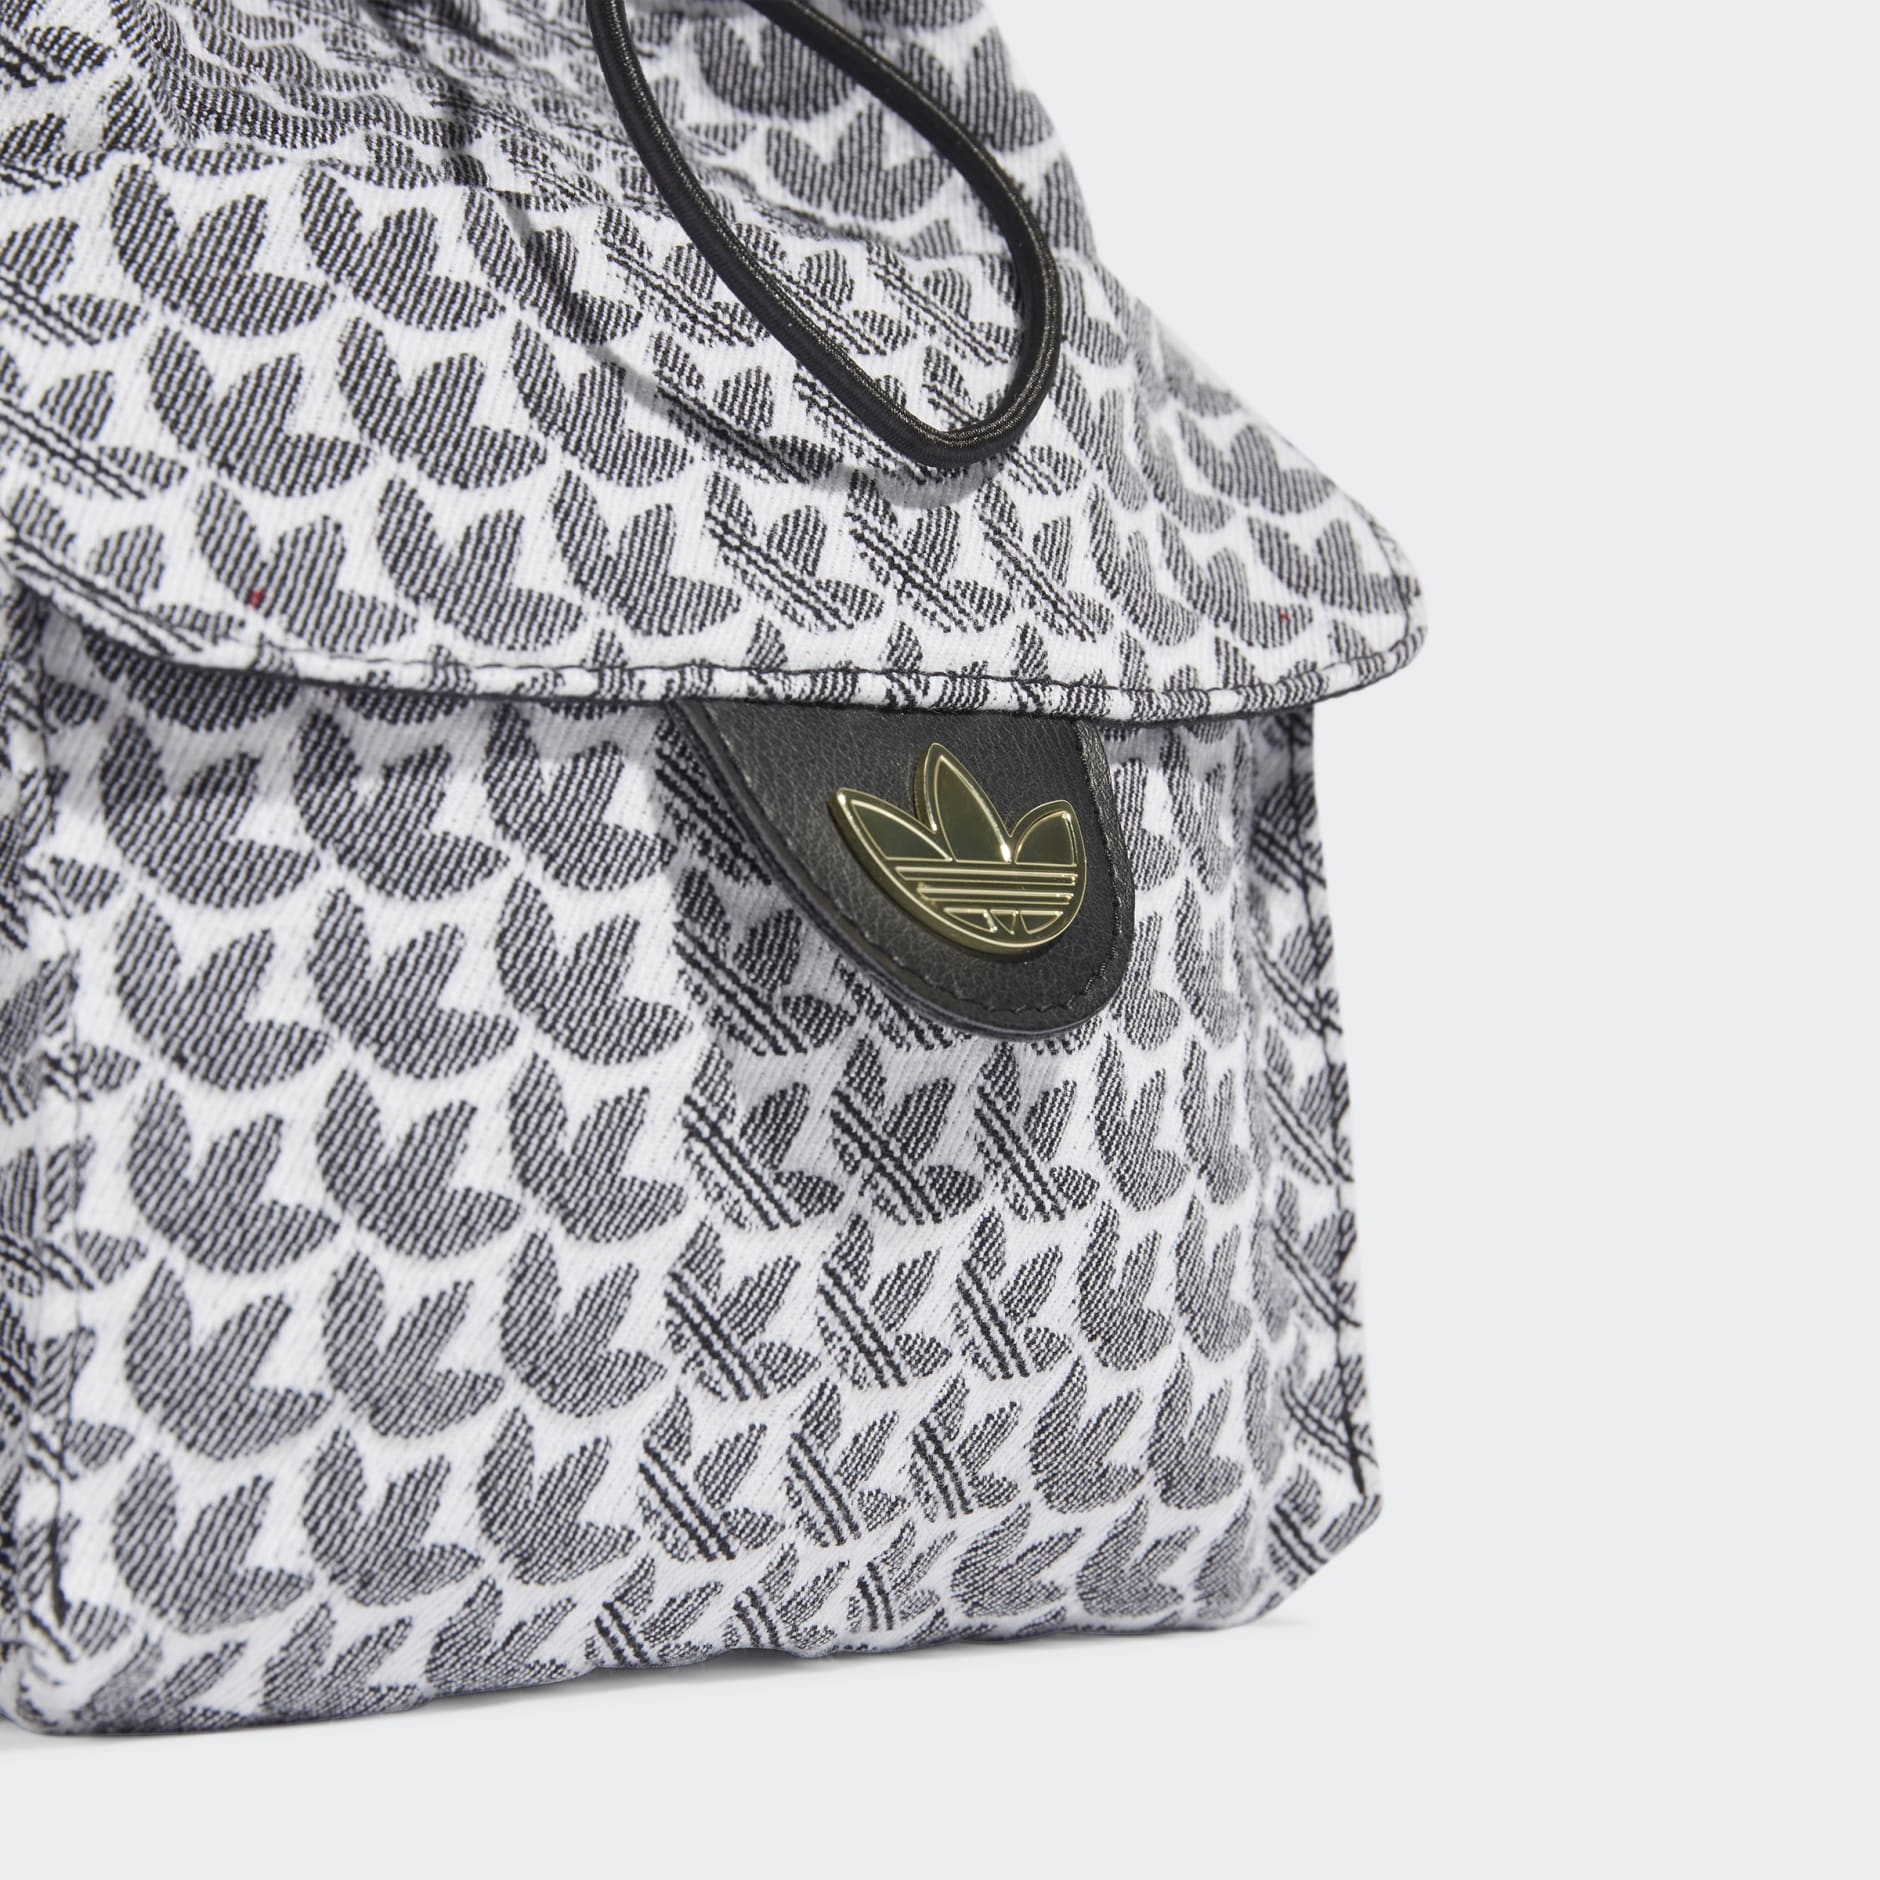 COD Adidas Originals Shopper Black Lifestyle Bags New Accessories Shopping Bag  Tote Fashion